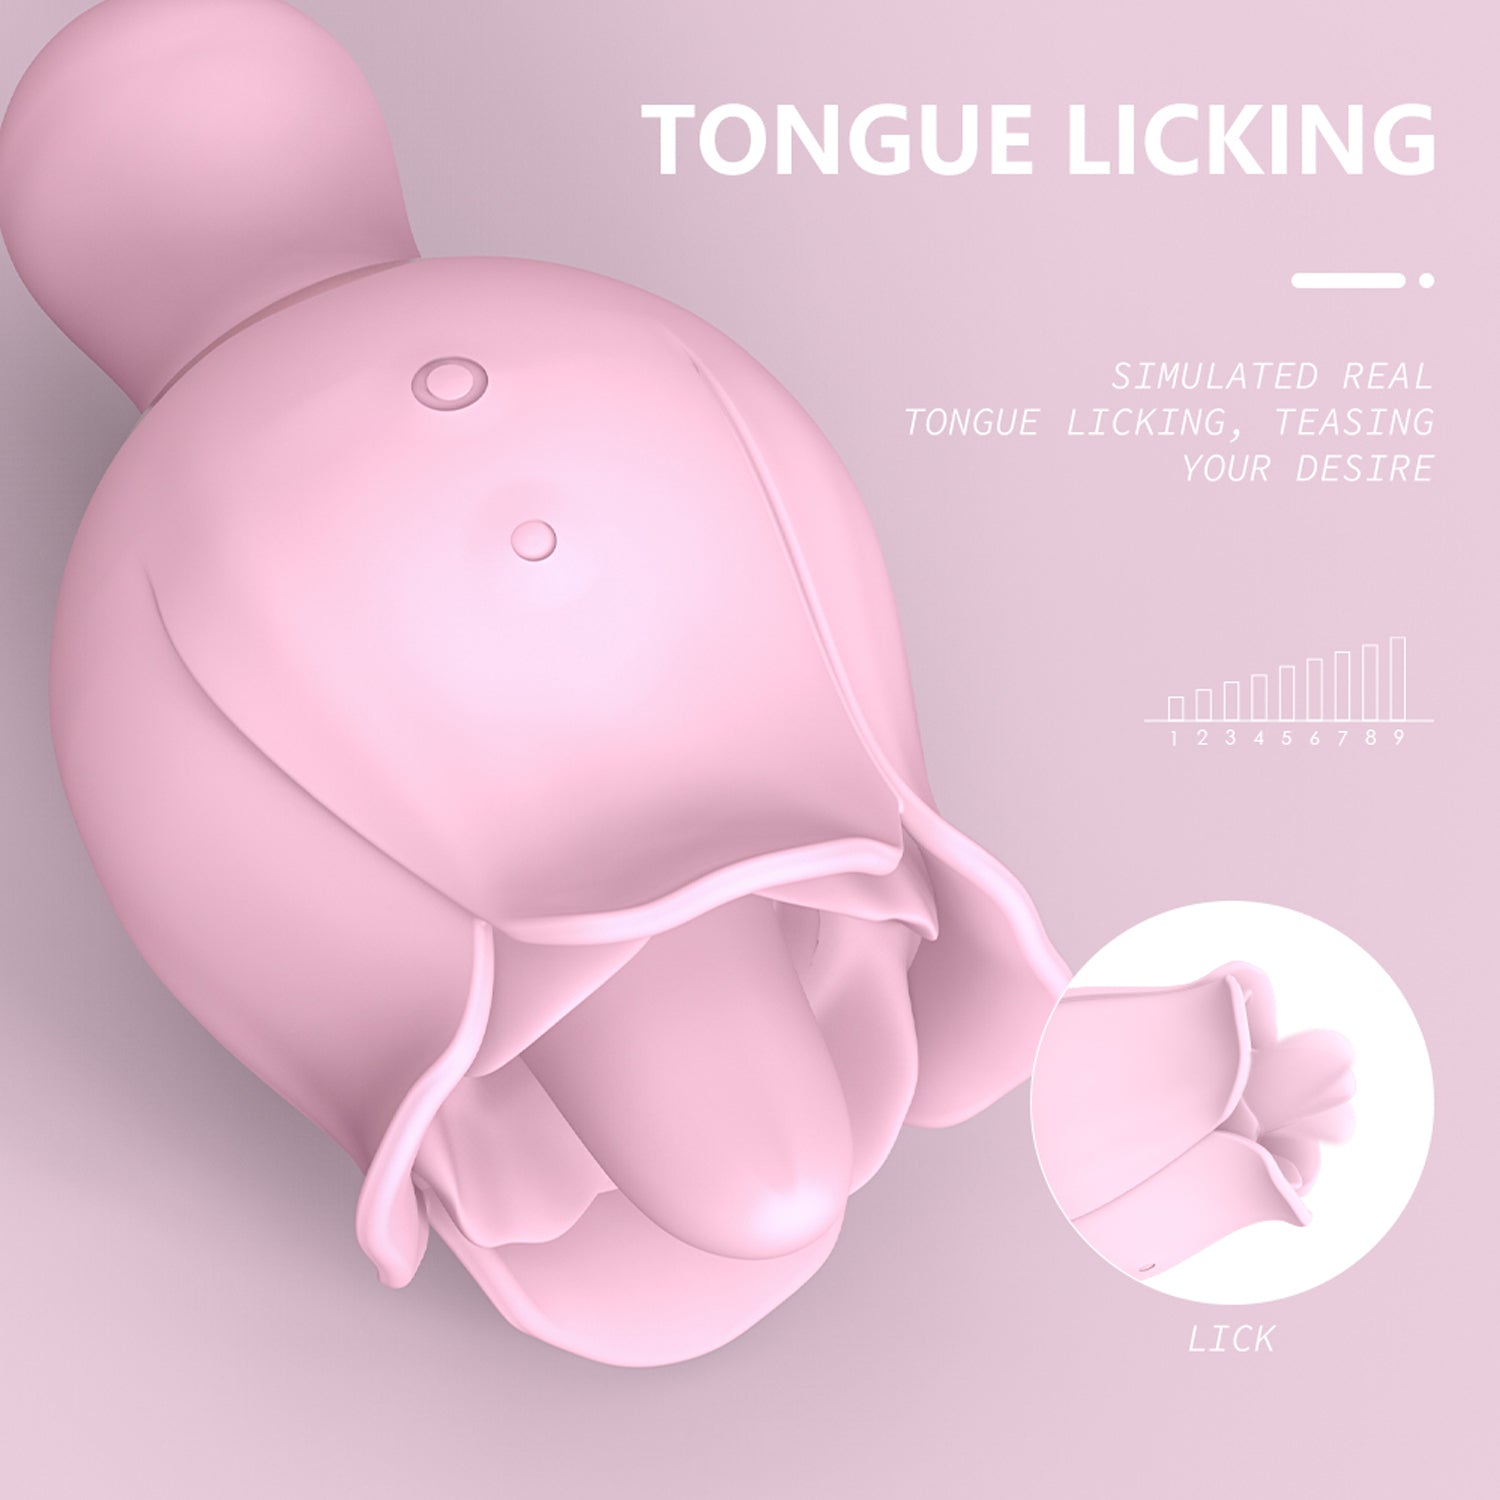 Rose Clitoral Tongue Licking Toy Mini Small Vibrators